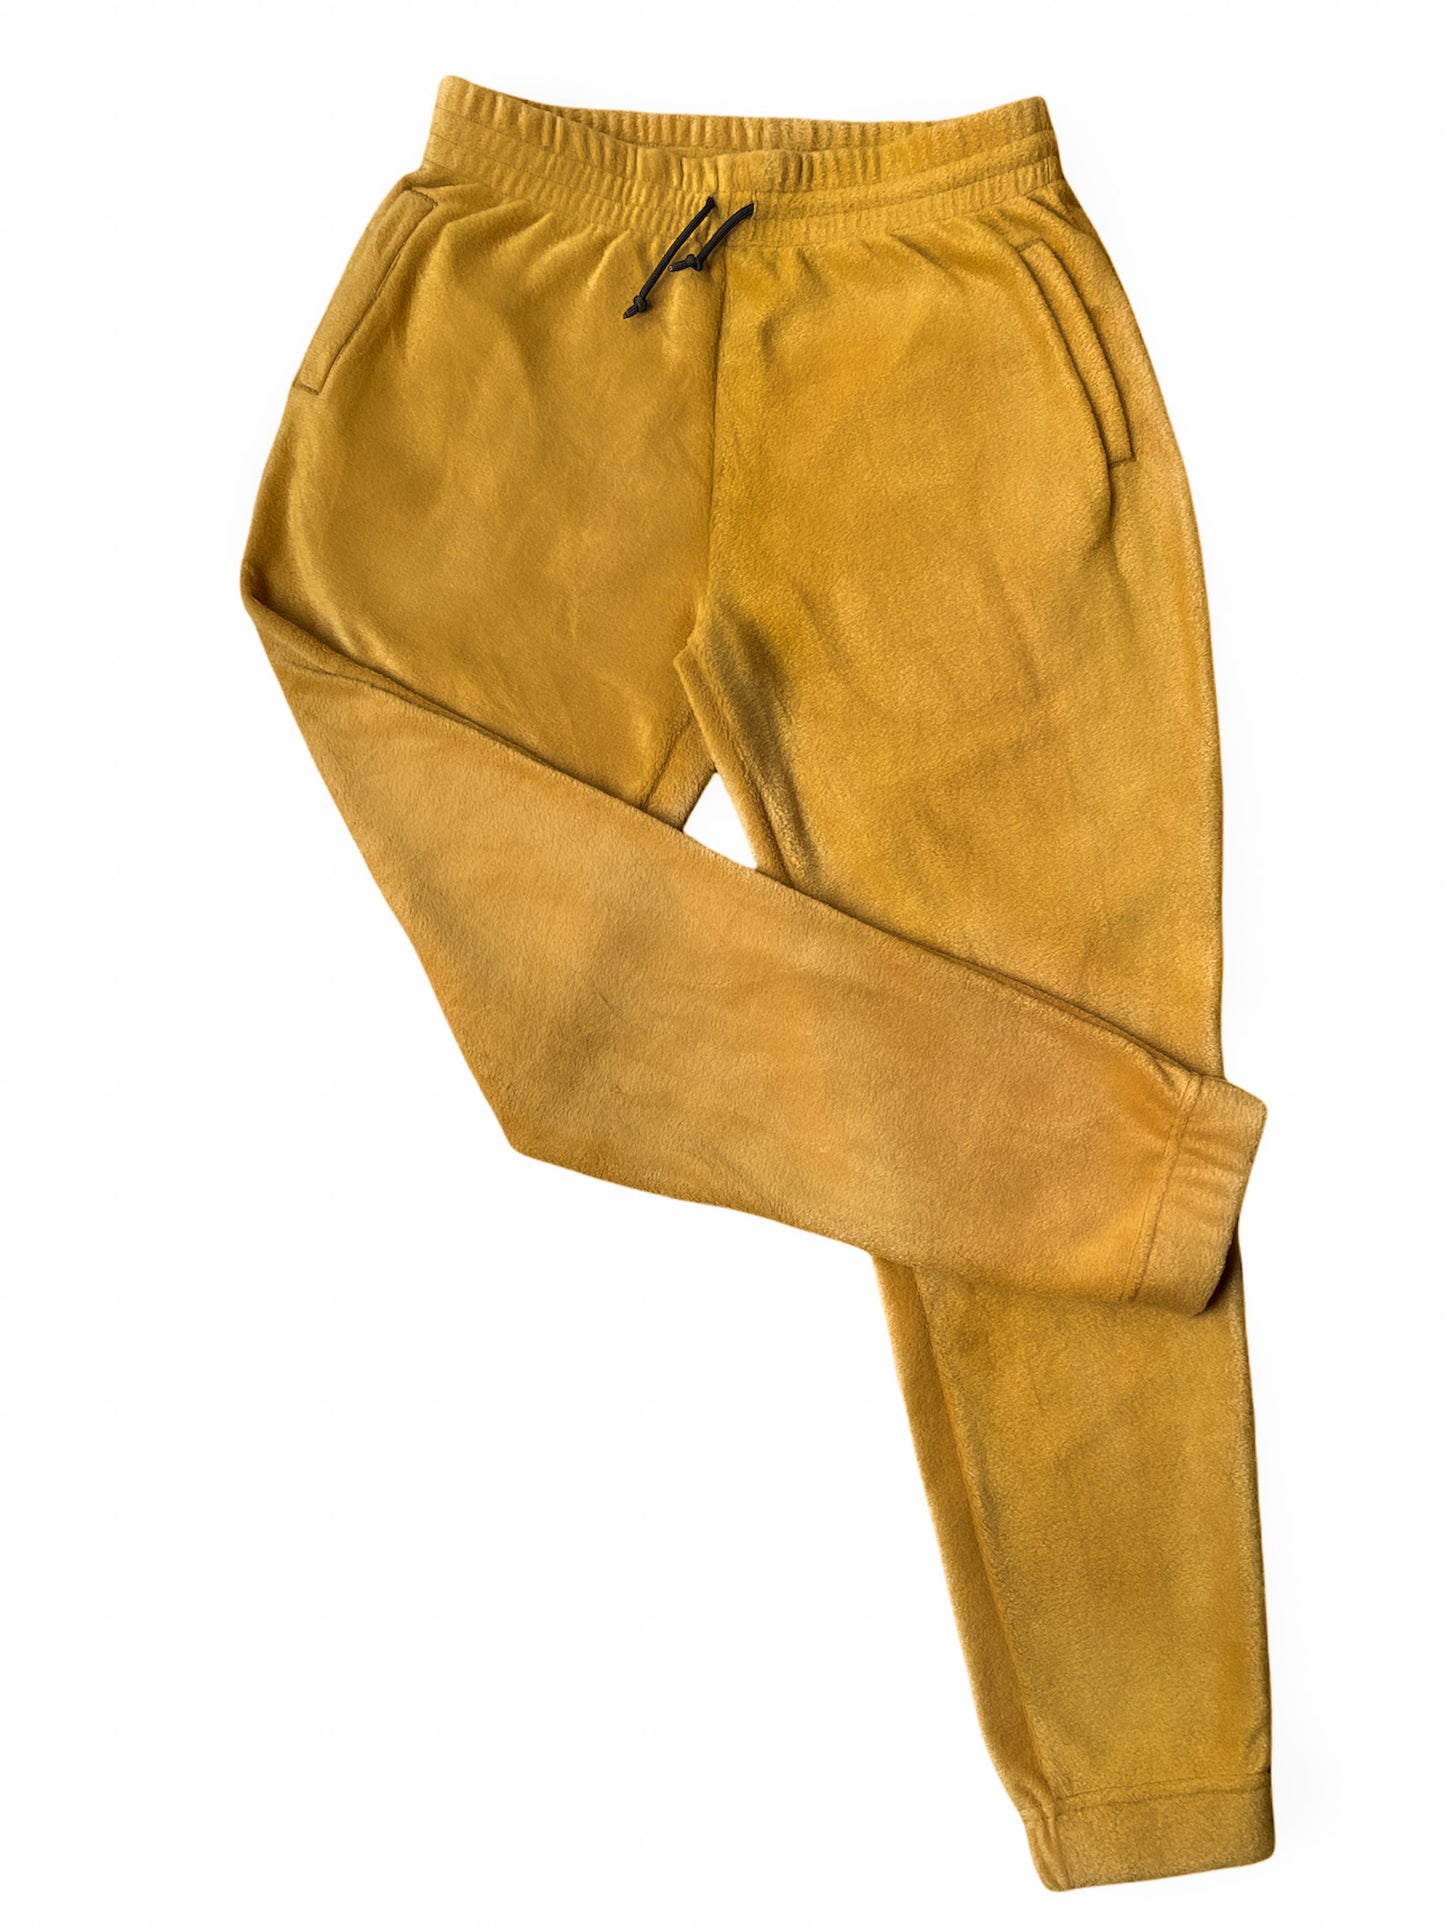 Grand Pantalon - Gold